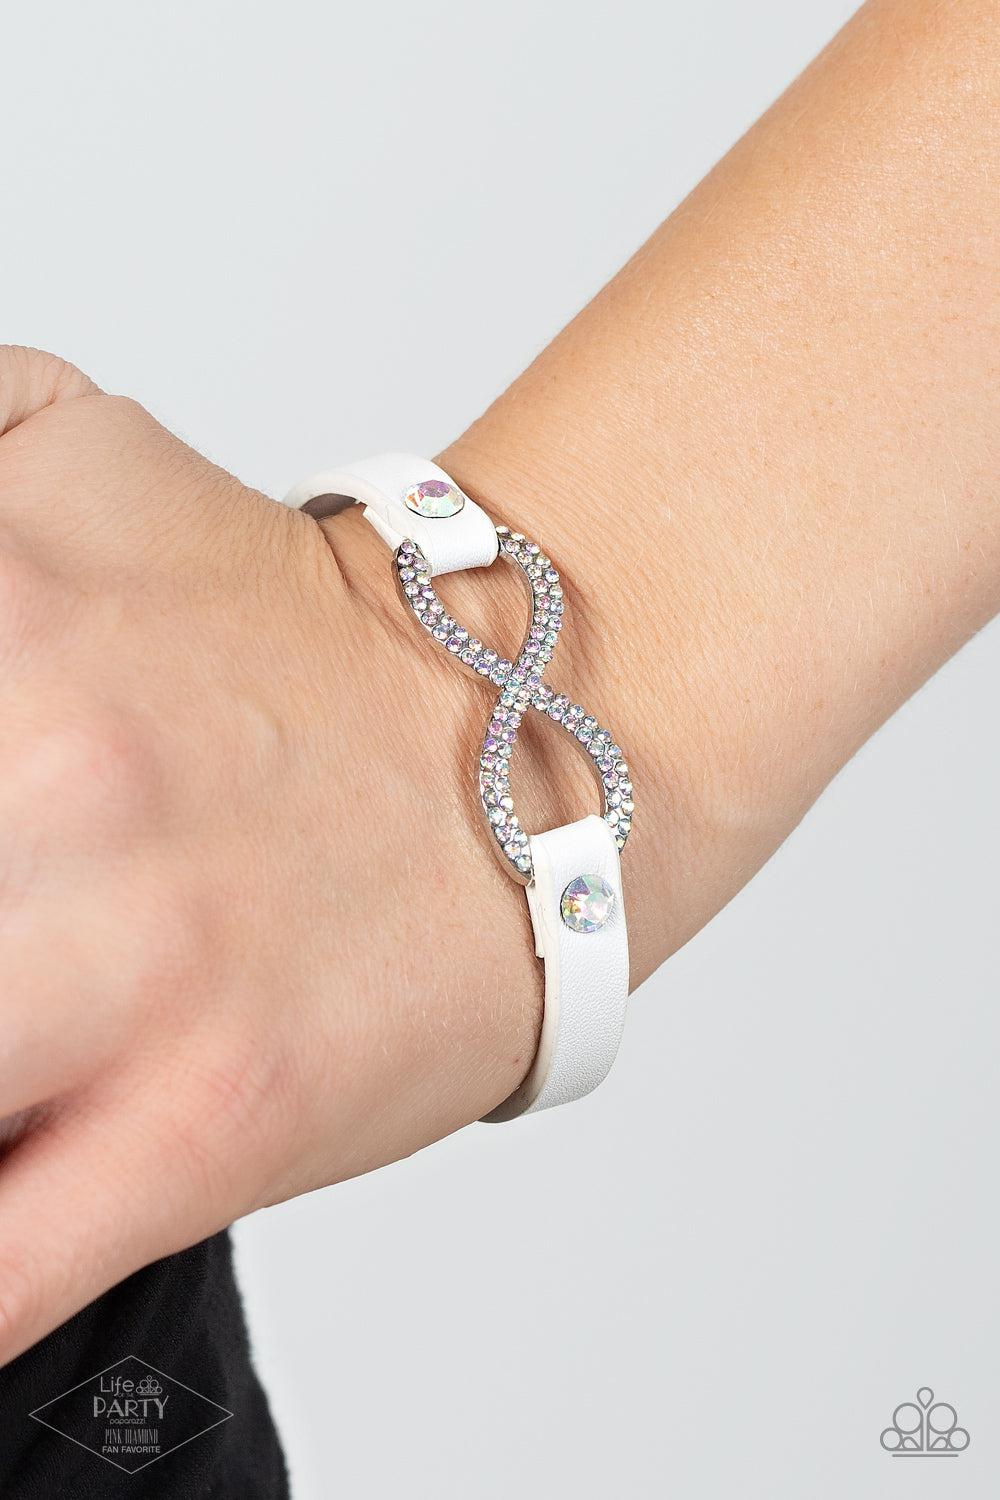 Innocent Till Proven GLITZY! Multi Iridescent Infinity Wrap Bracelet - Paparazzi Accessories-on model - CarasShop.com - $5 Jewelry by Cara Jewels